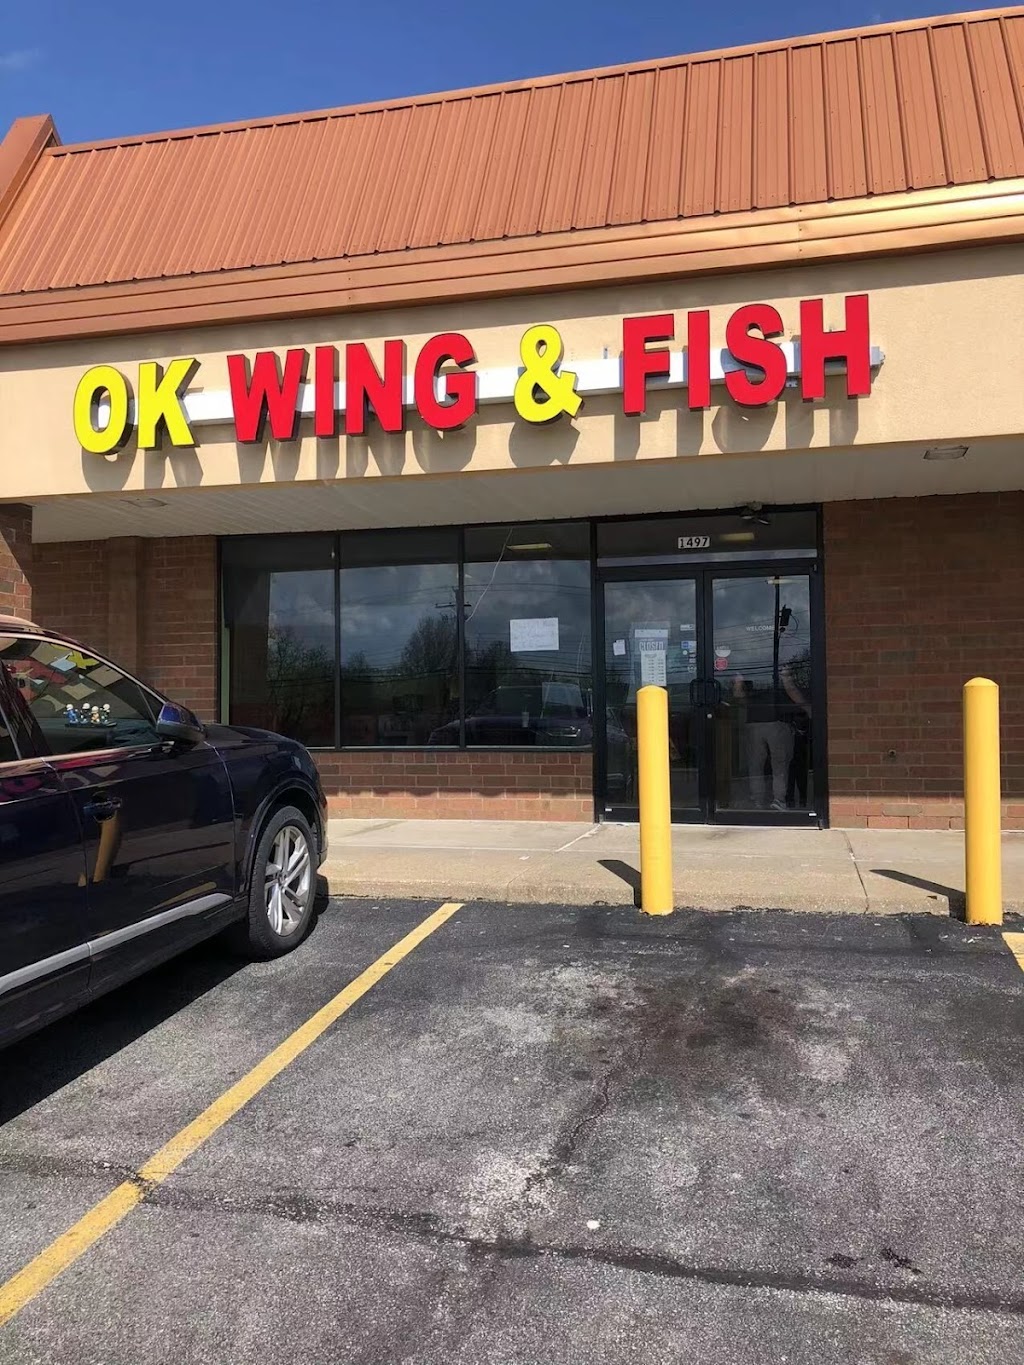 OK Wings & Fish (Formerly Asian Garden) | 1497 S Arlington St, Akron, OH 44306, USA | Phone: (330) 773-7771